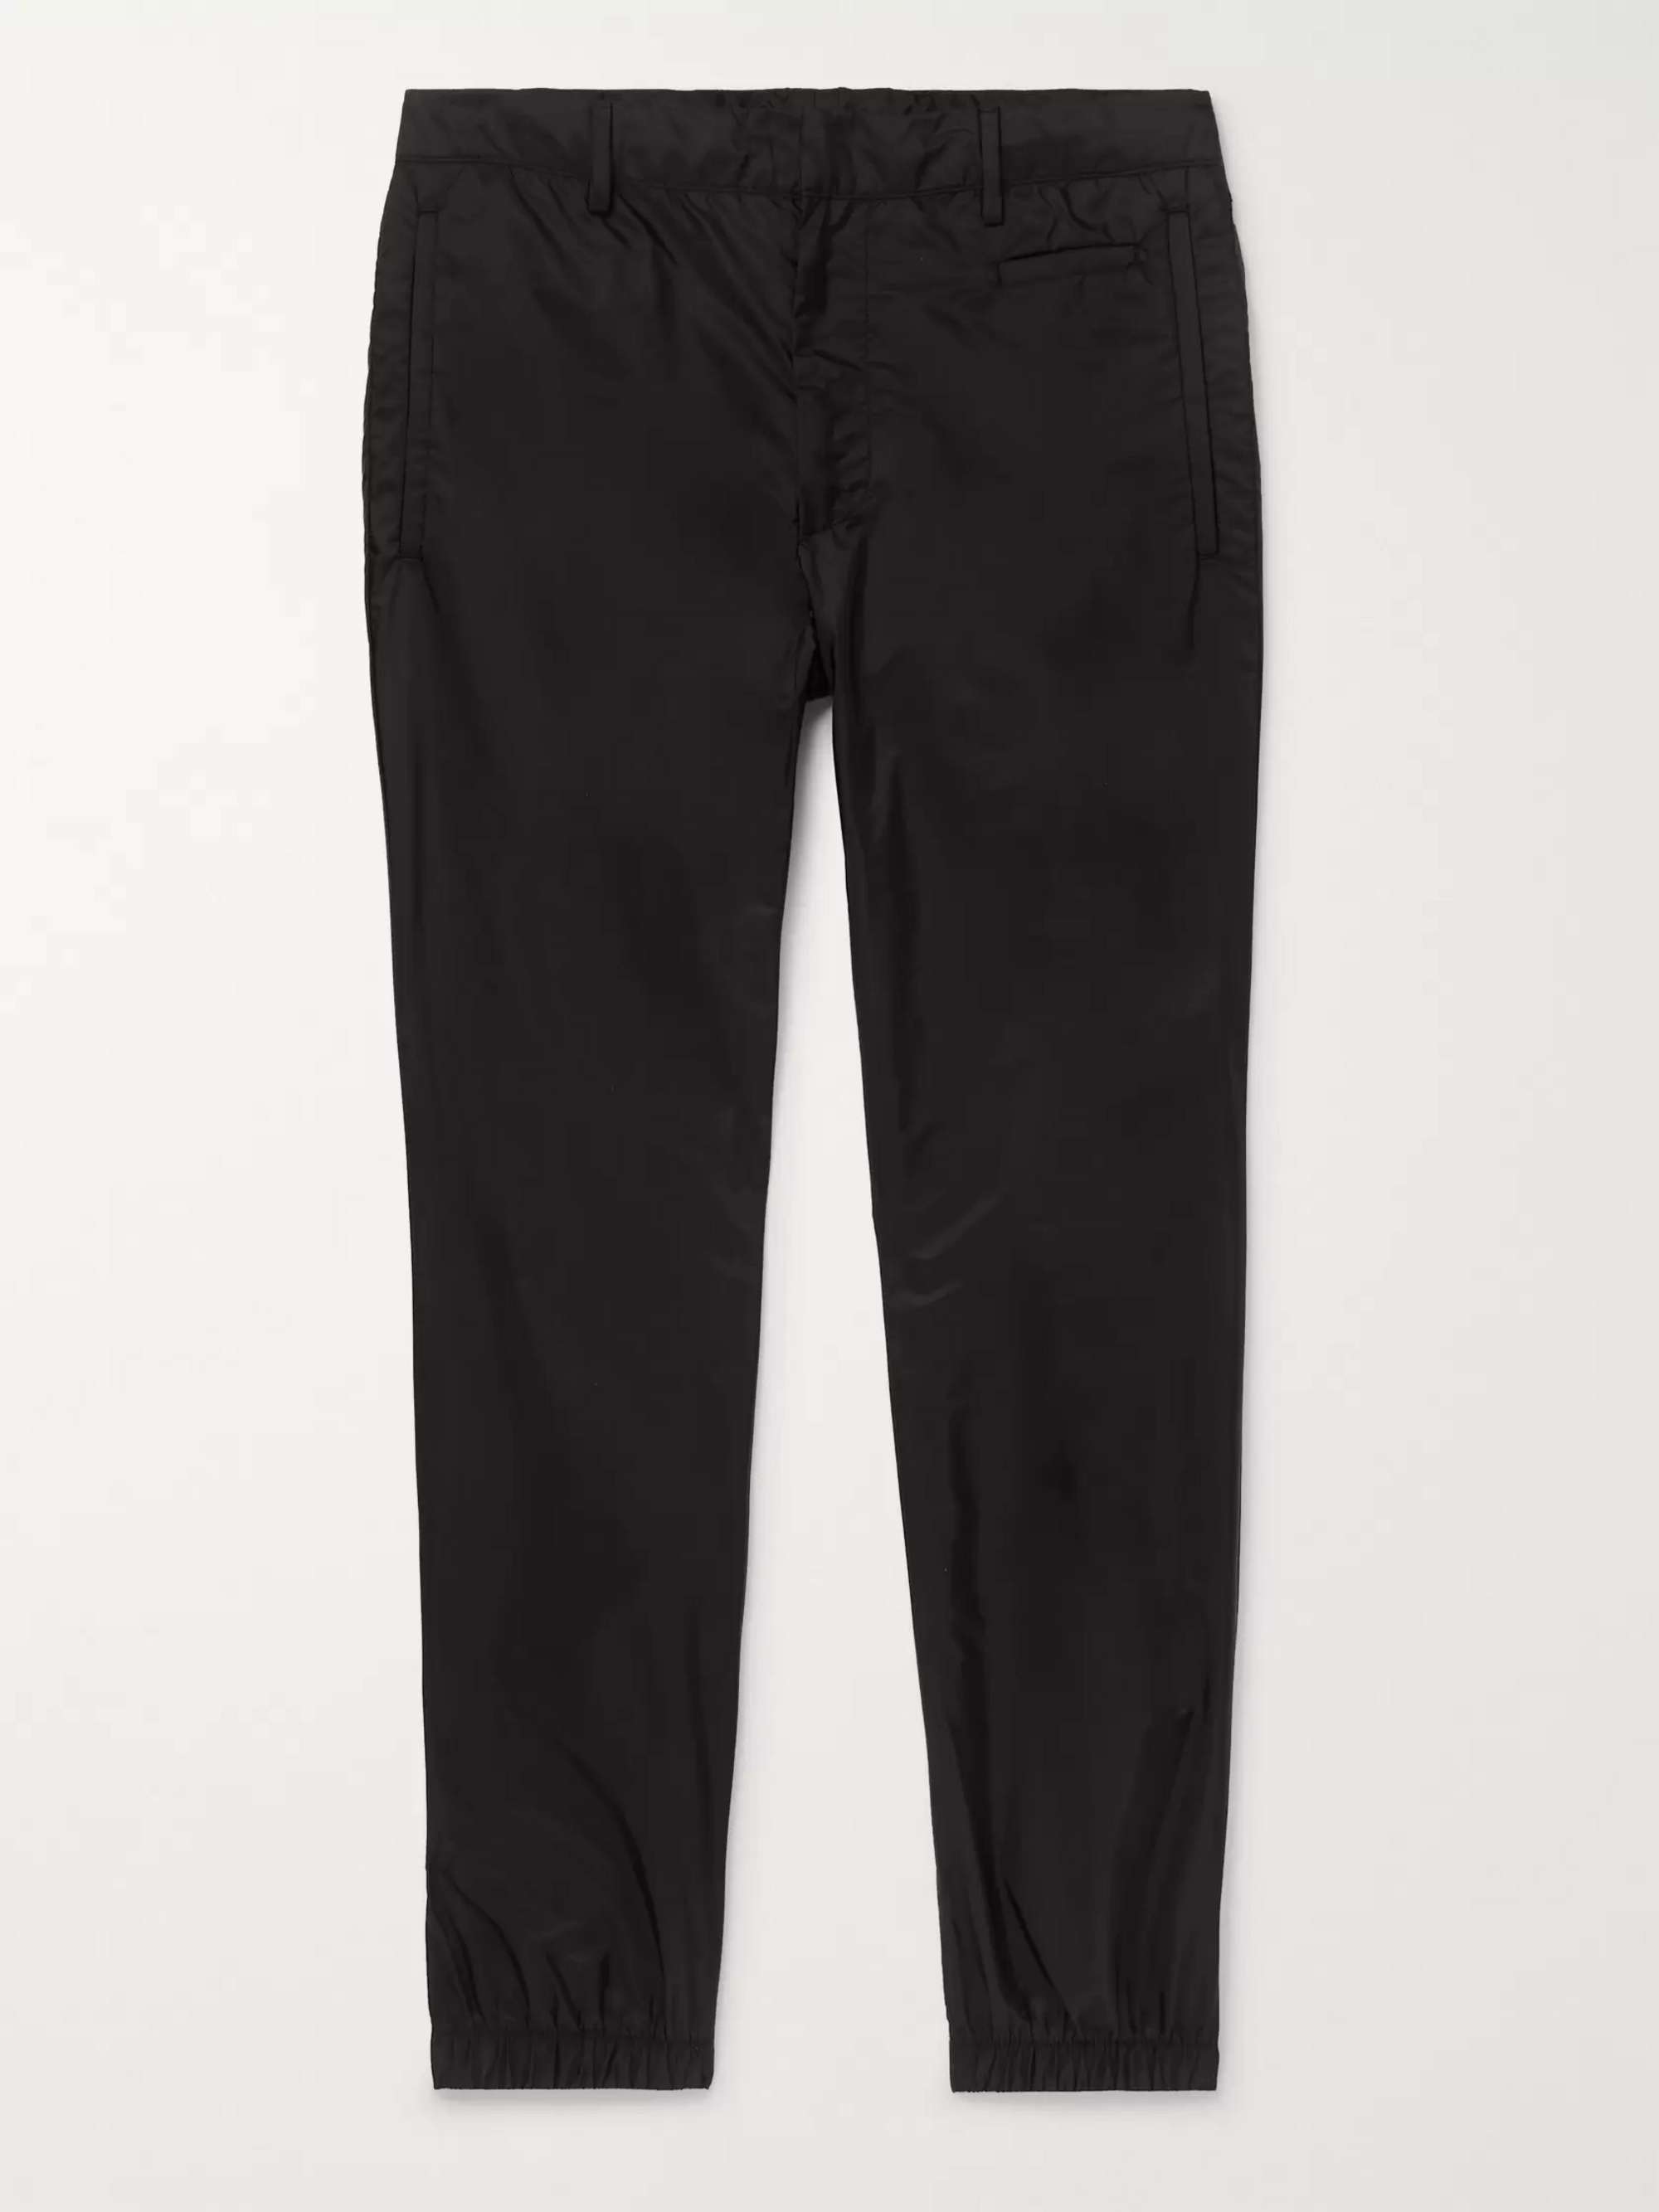 PRADA Black Slim-Fit Nylon Trousers